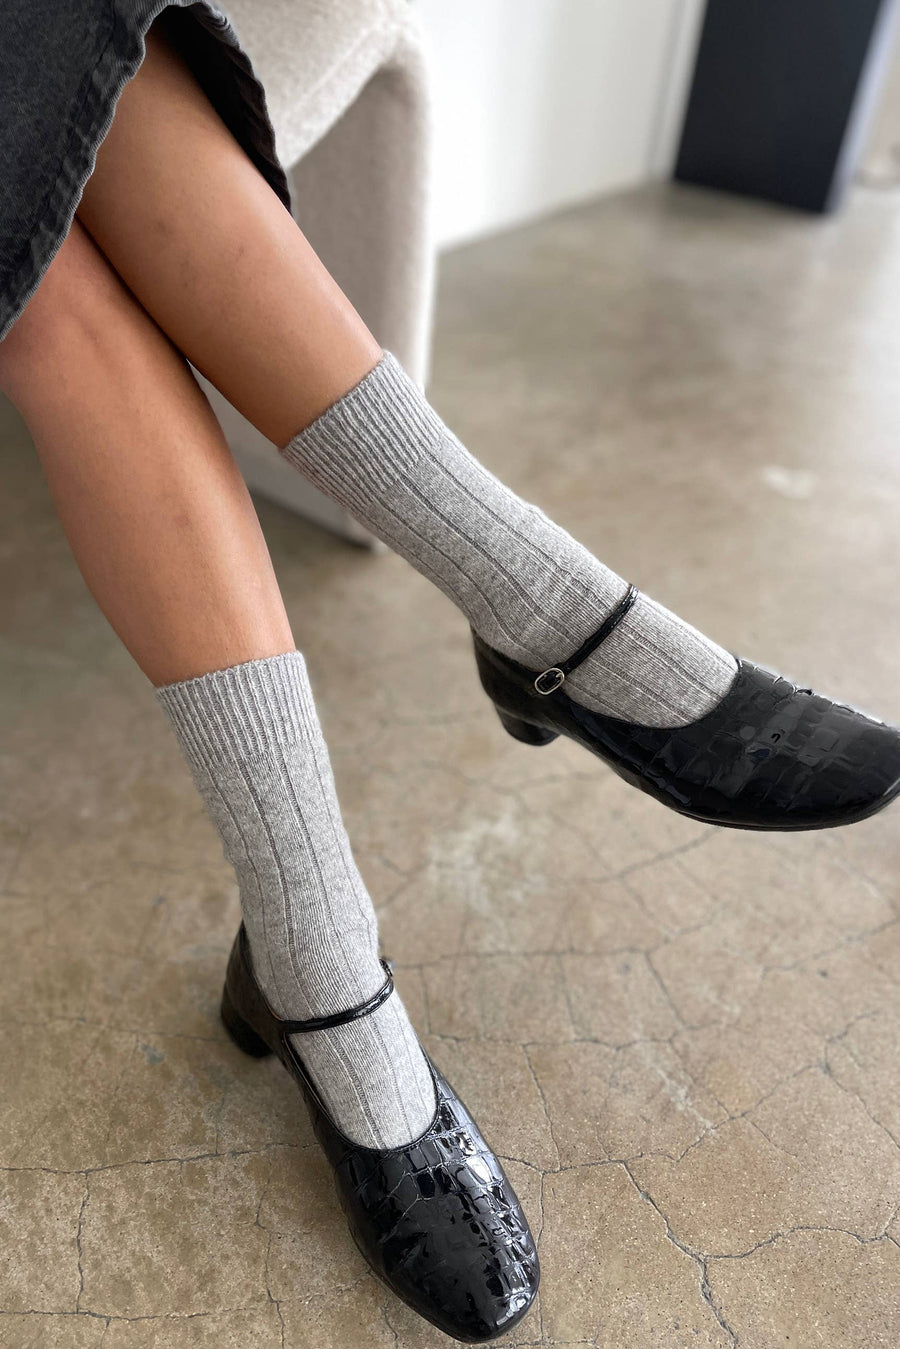 Classic Cashmere Socks: Black